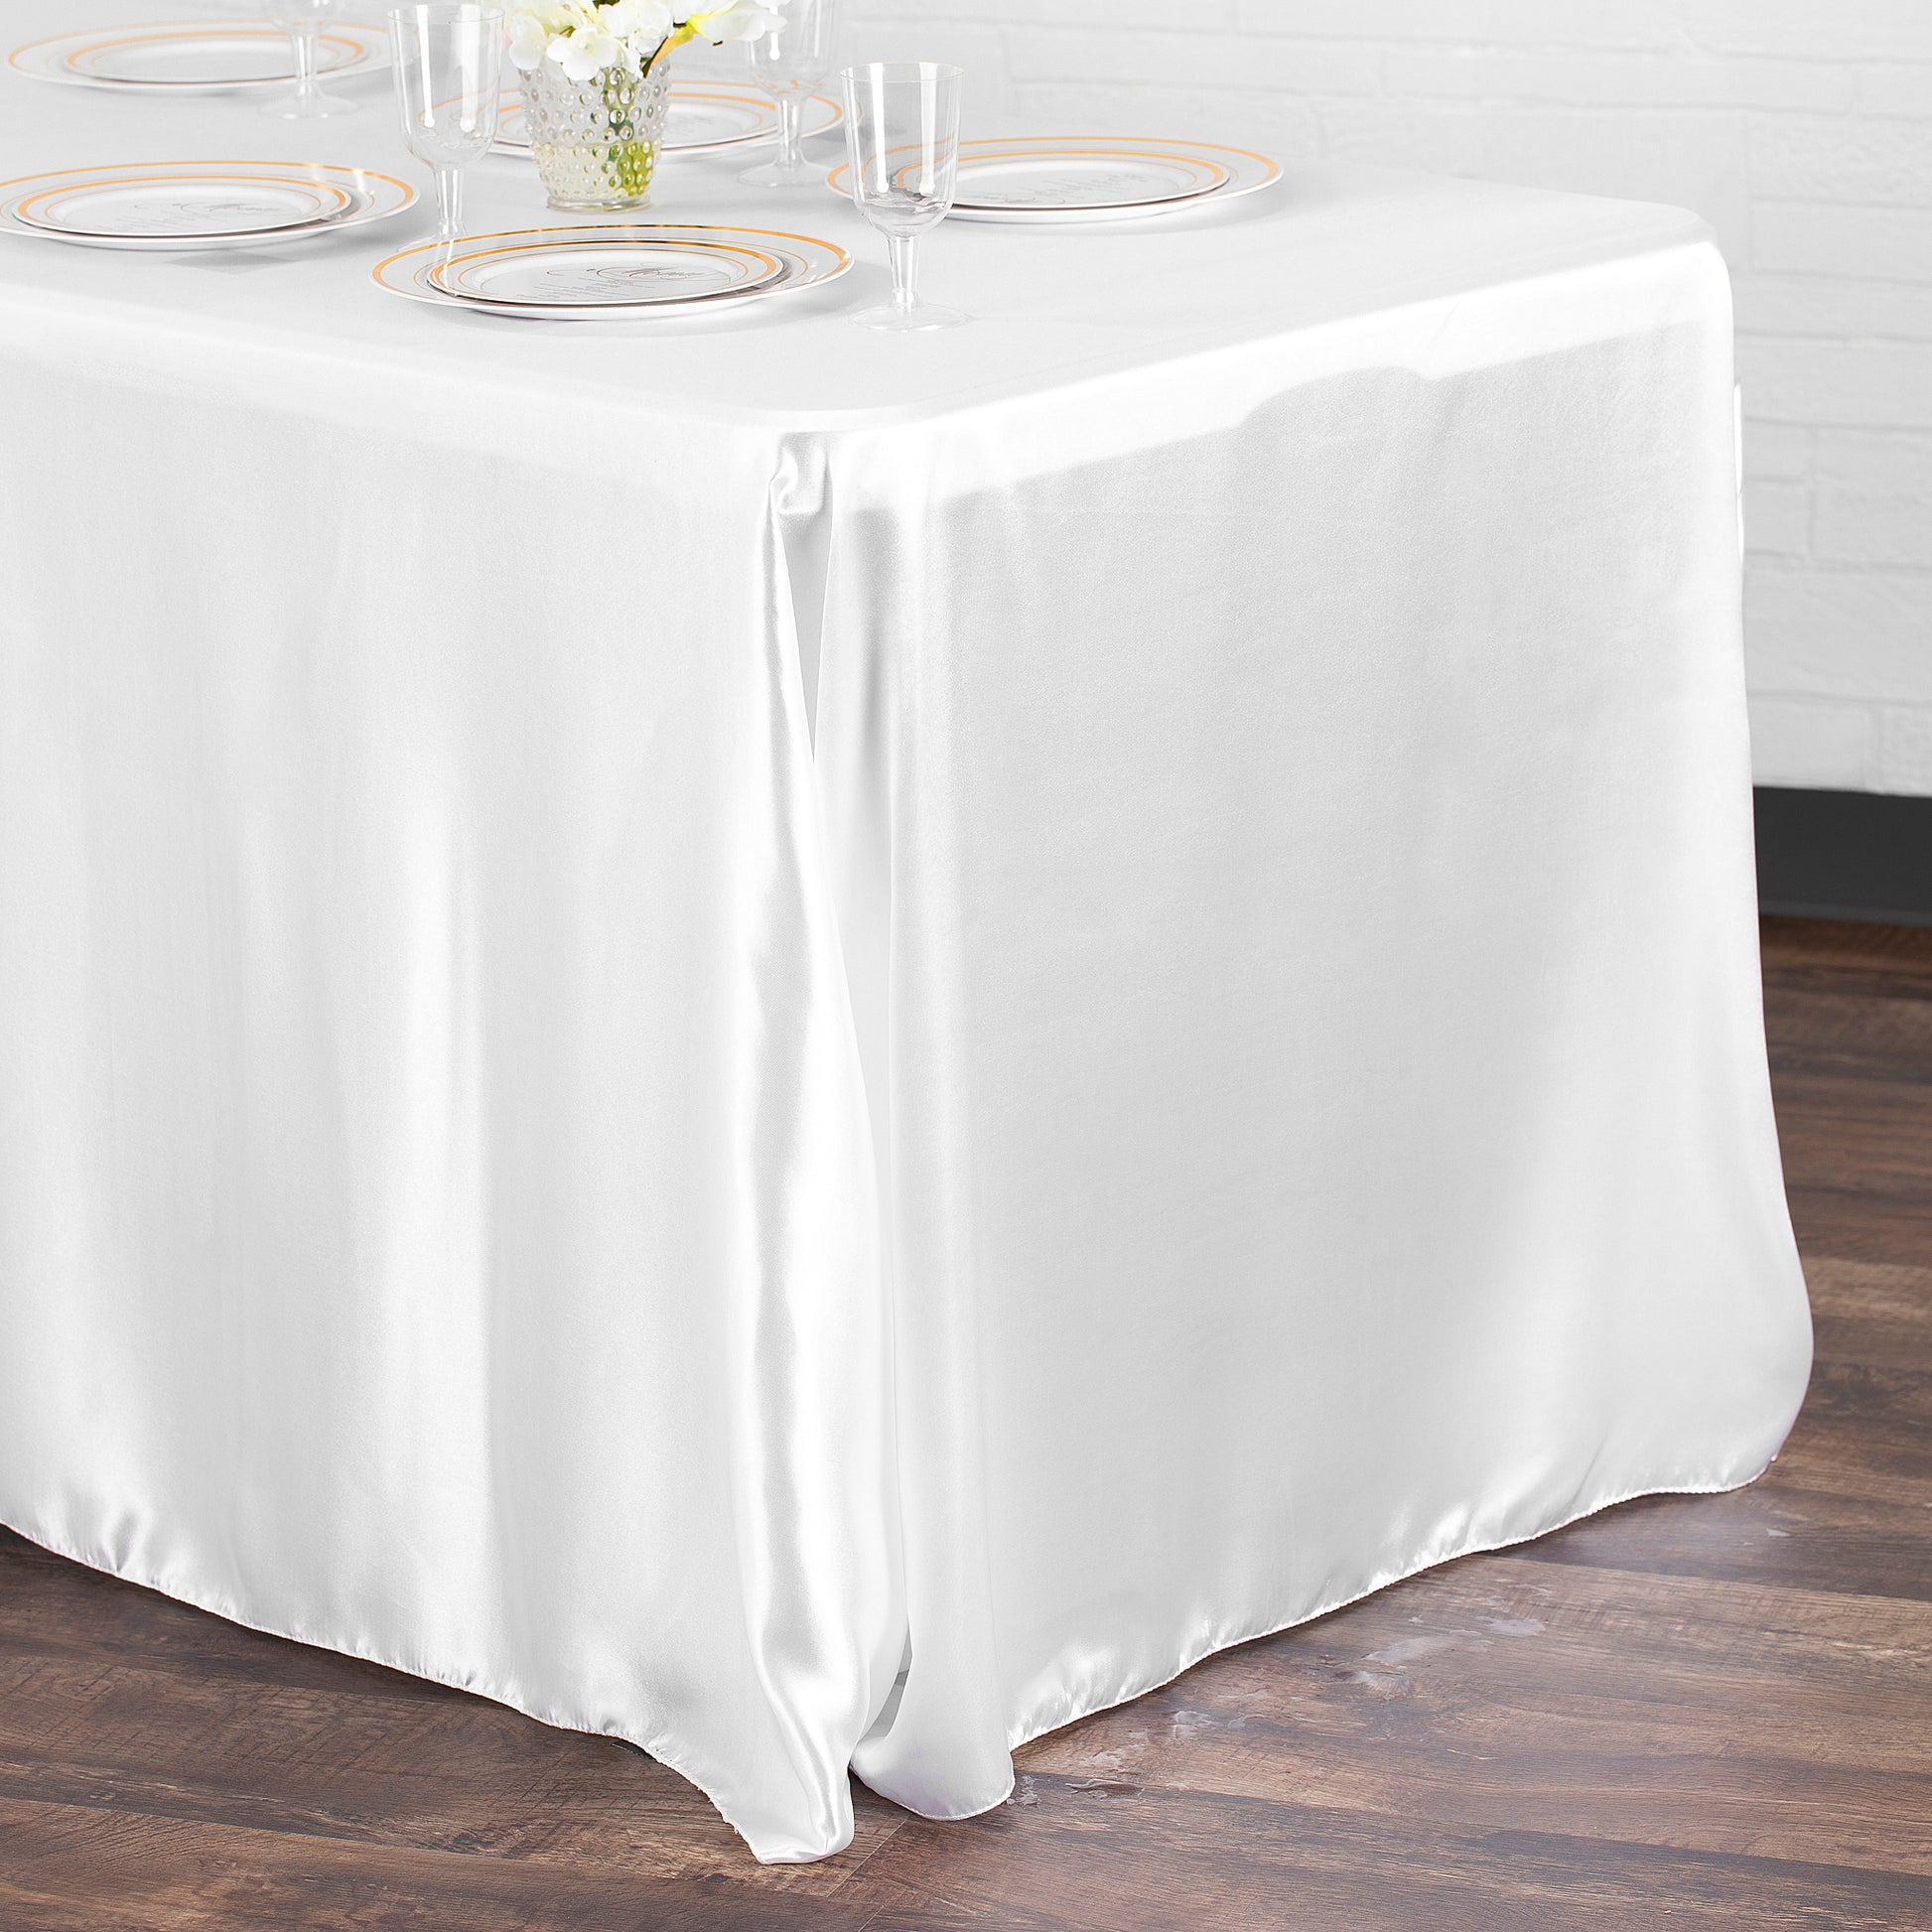 12 Brocade napkins set fabric ivory dinner table linens lot cloth